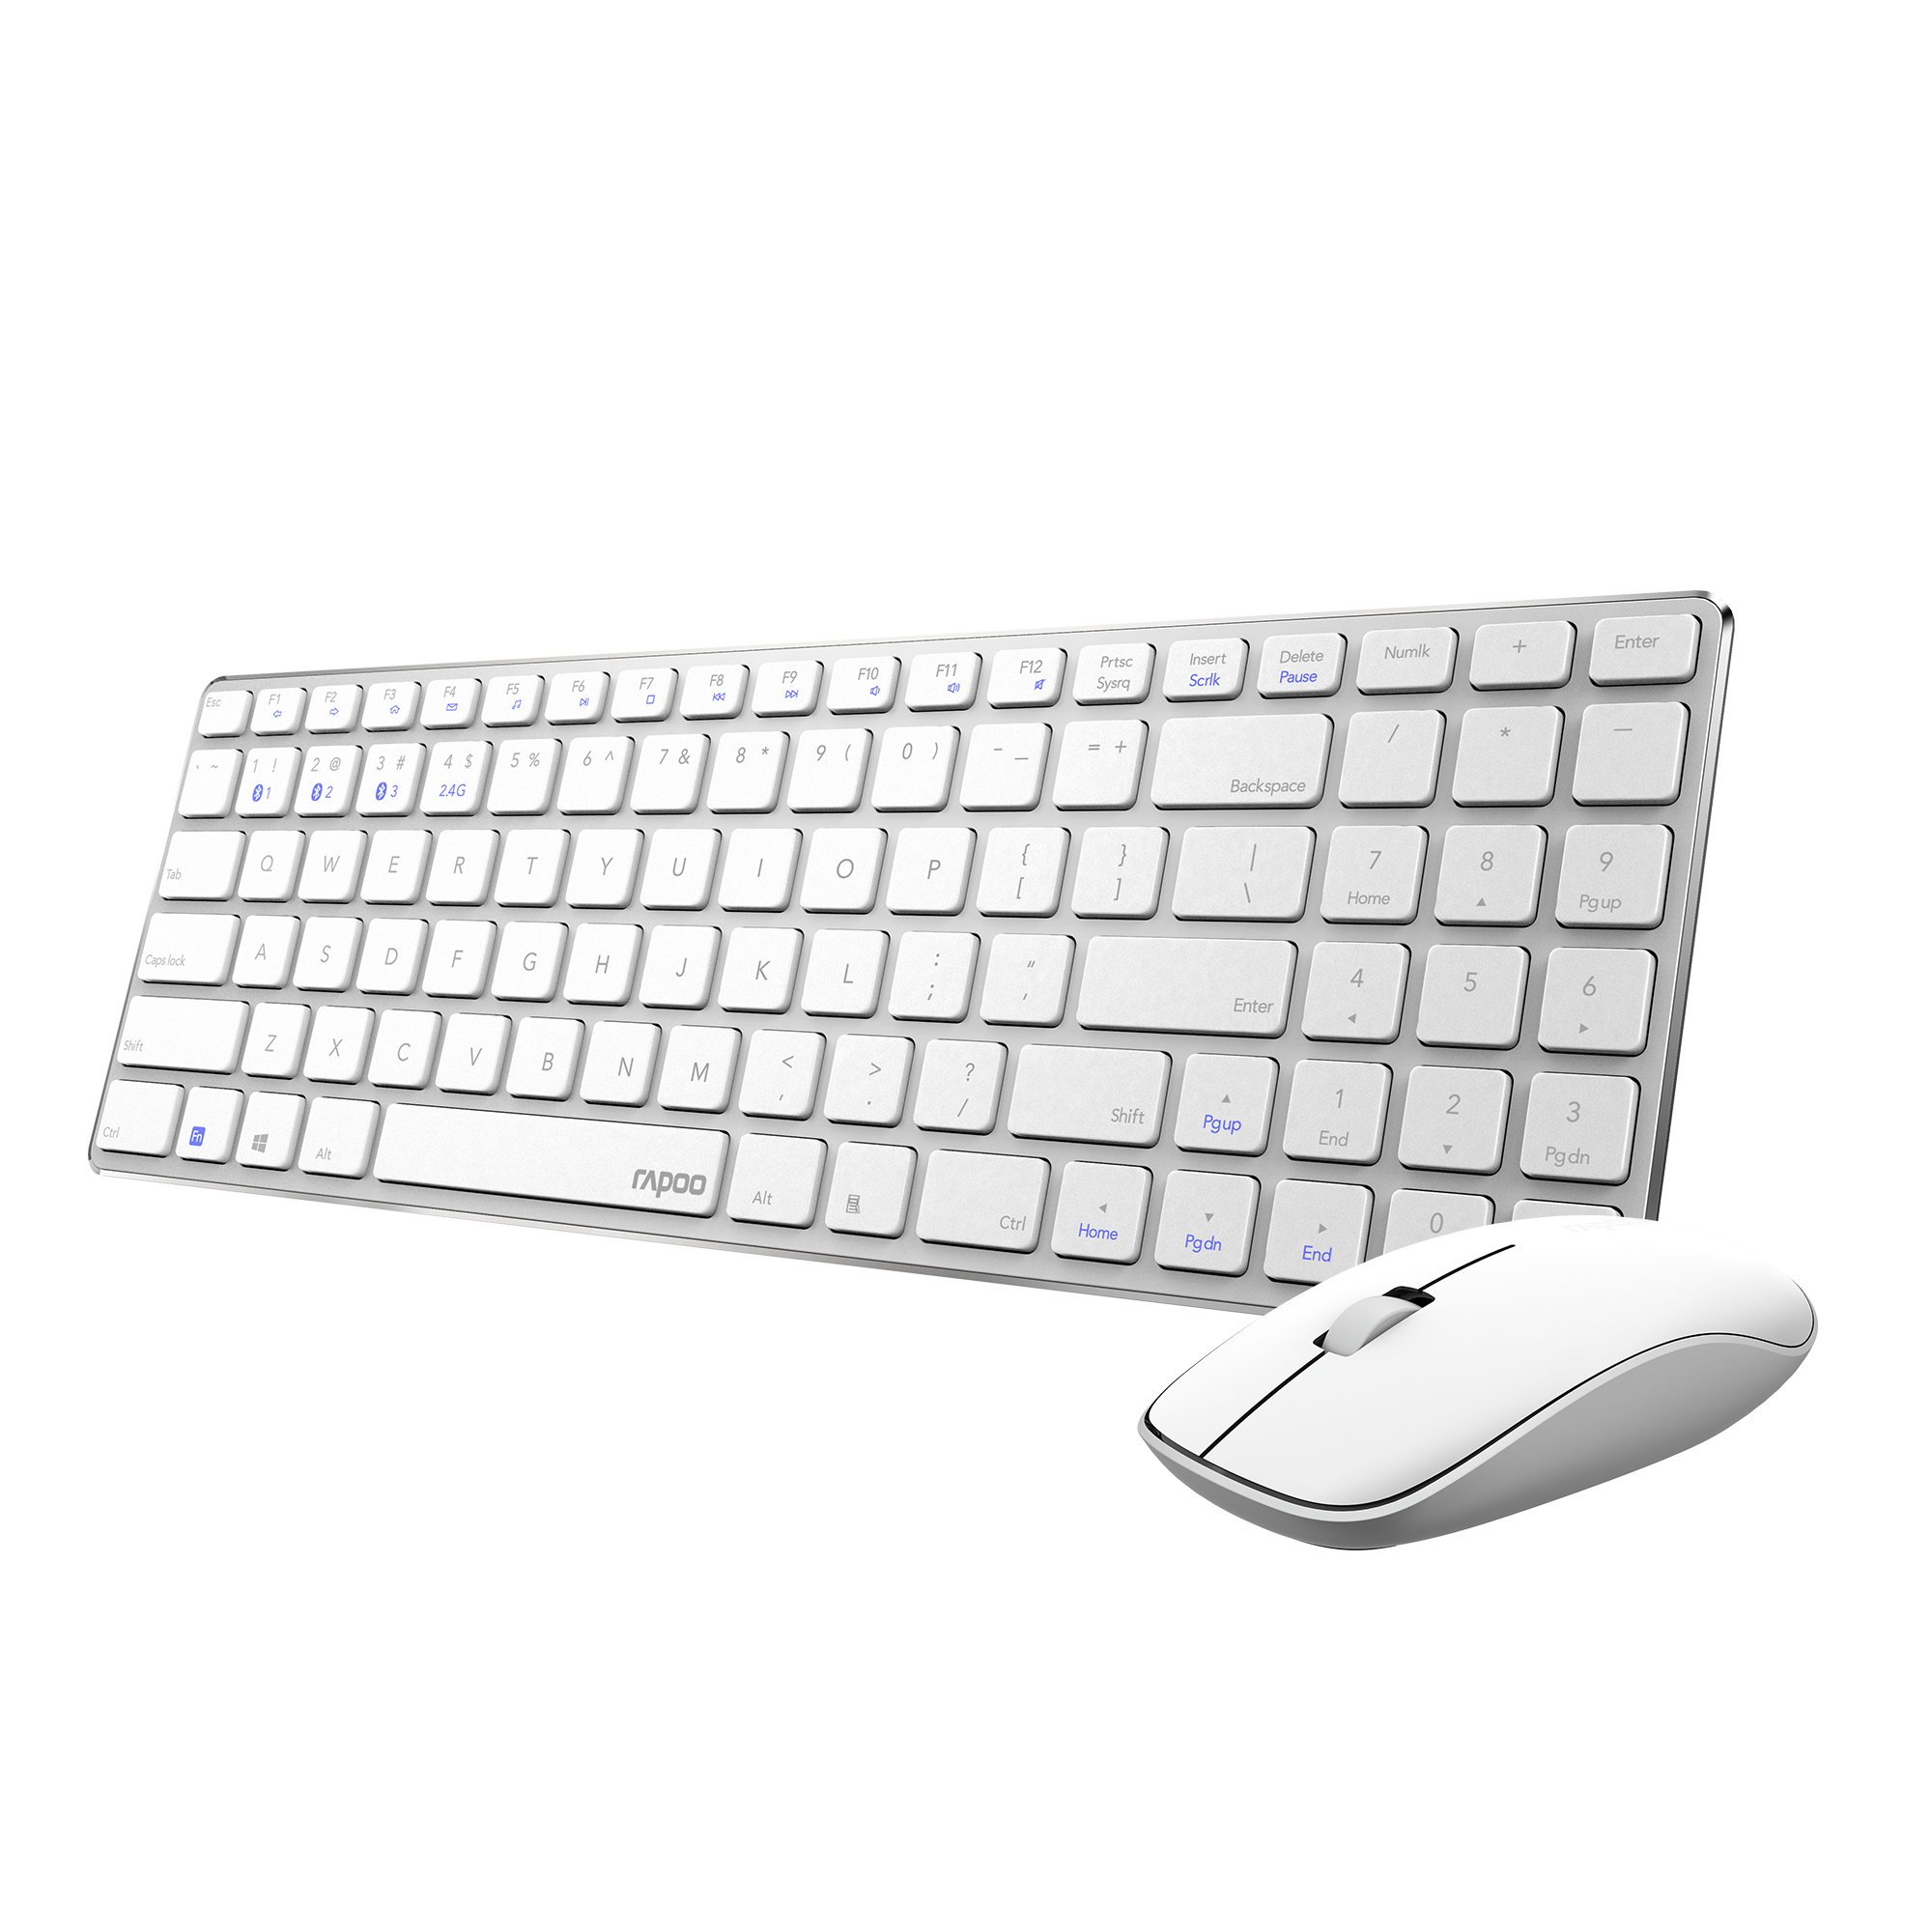 Rapoo 9300M Multi-Mode Wireless Ultra-slim Desktop Keyboard And Mouse Set